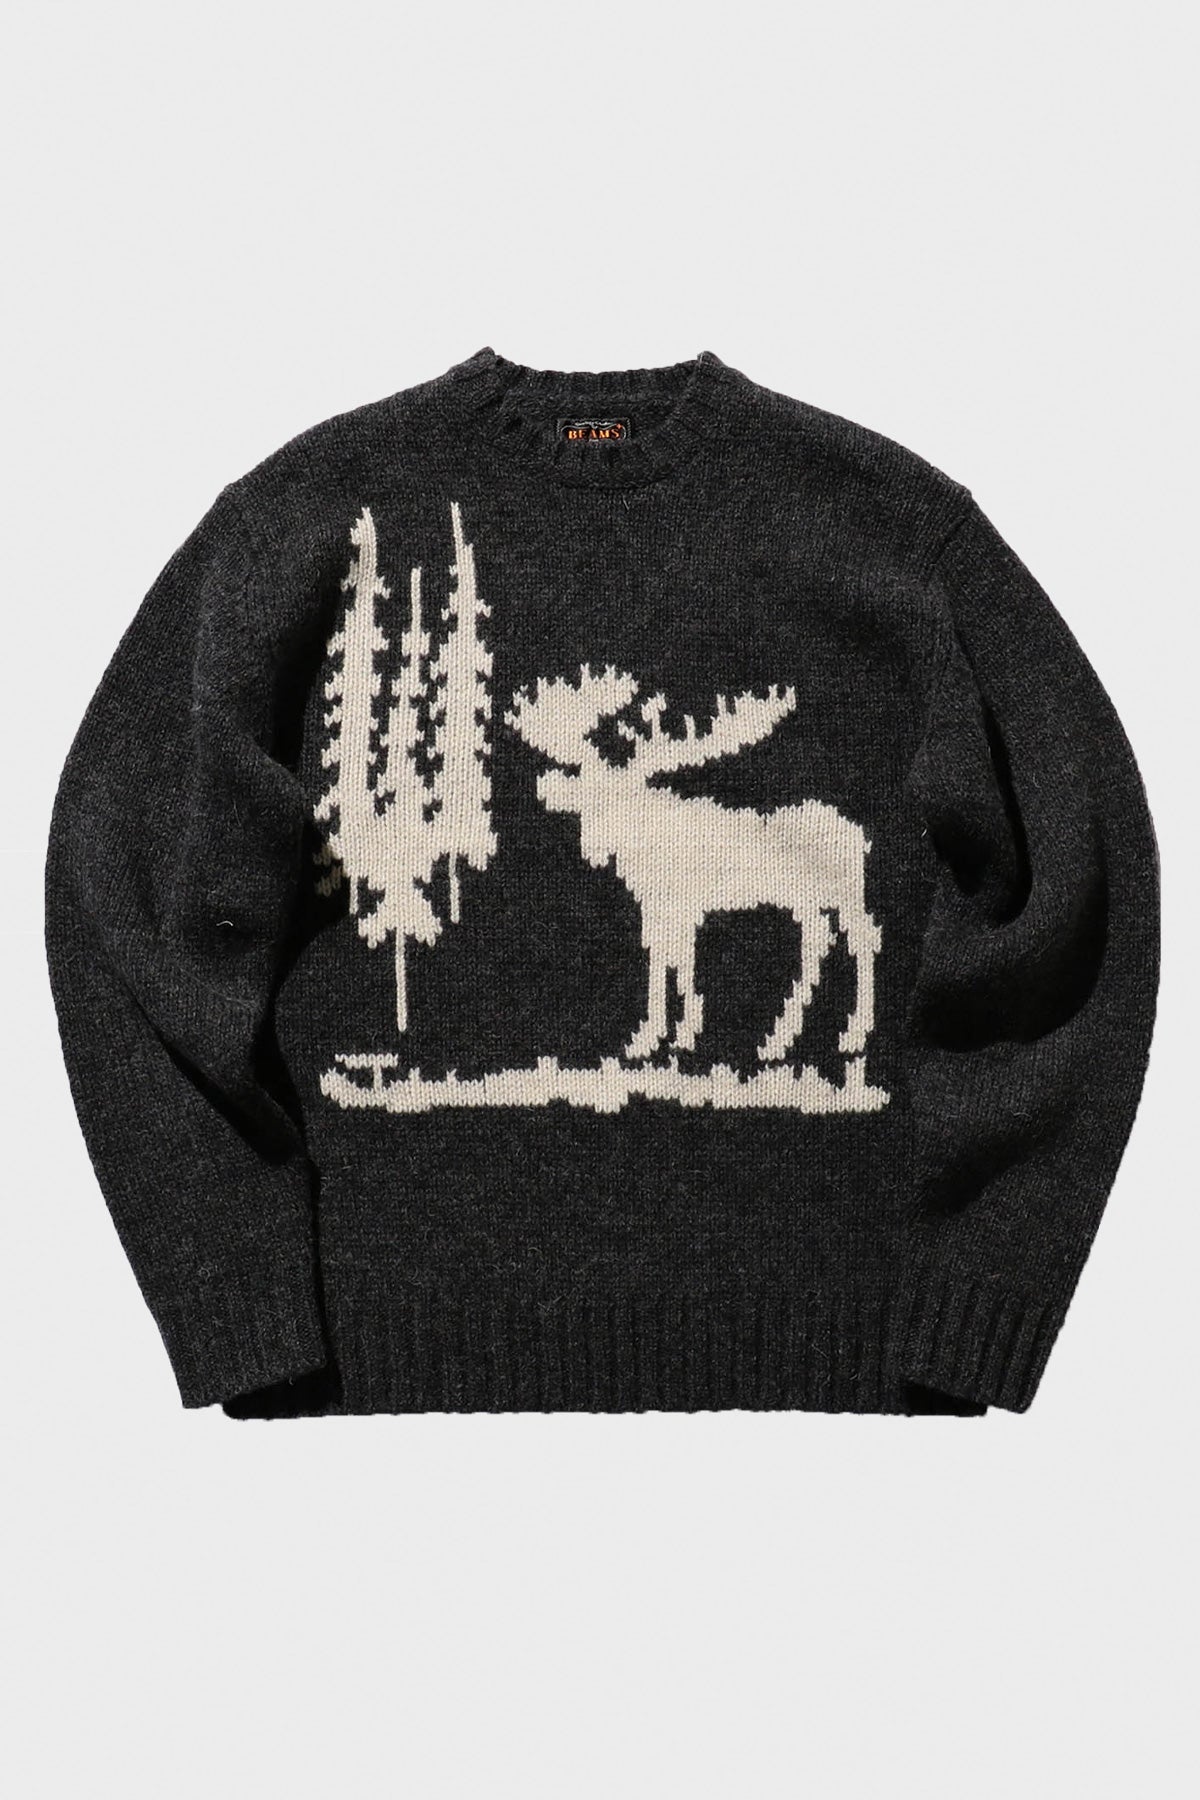 Buy Gymboree Deer Patterned Crew Neck Sweater In Brown